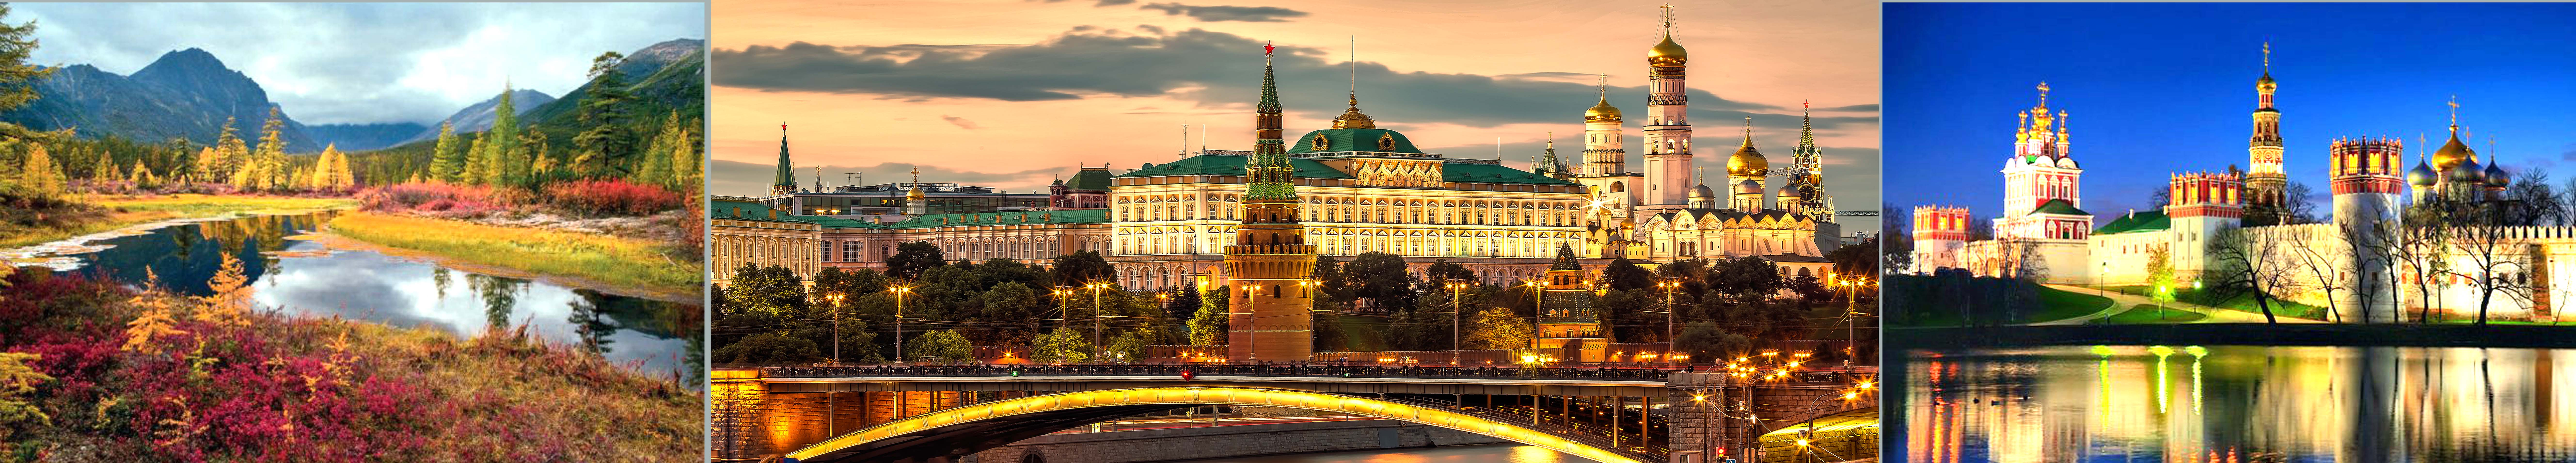 Rusiya Moskova. Kremlin nehir kÉ™narÄ± - RusÃ§a uzman Ã§eviri hizmeti